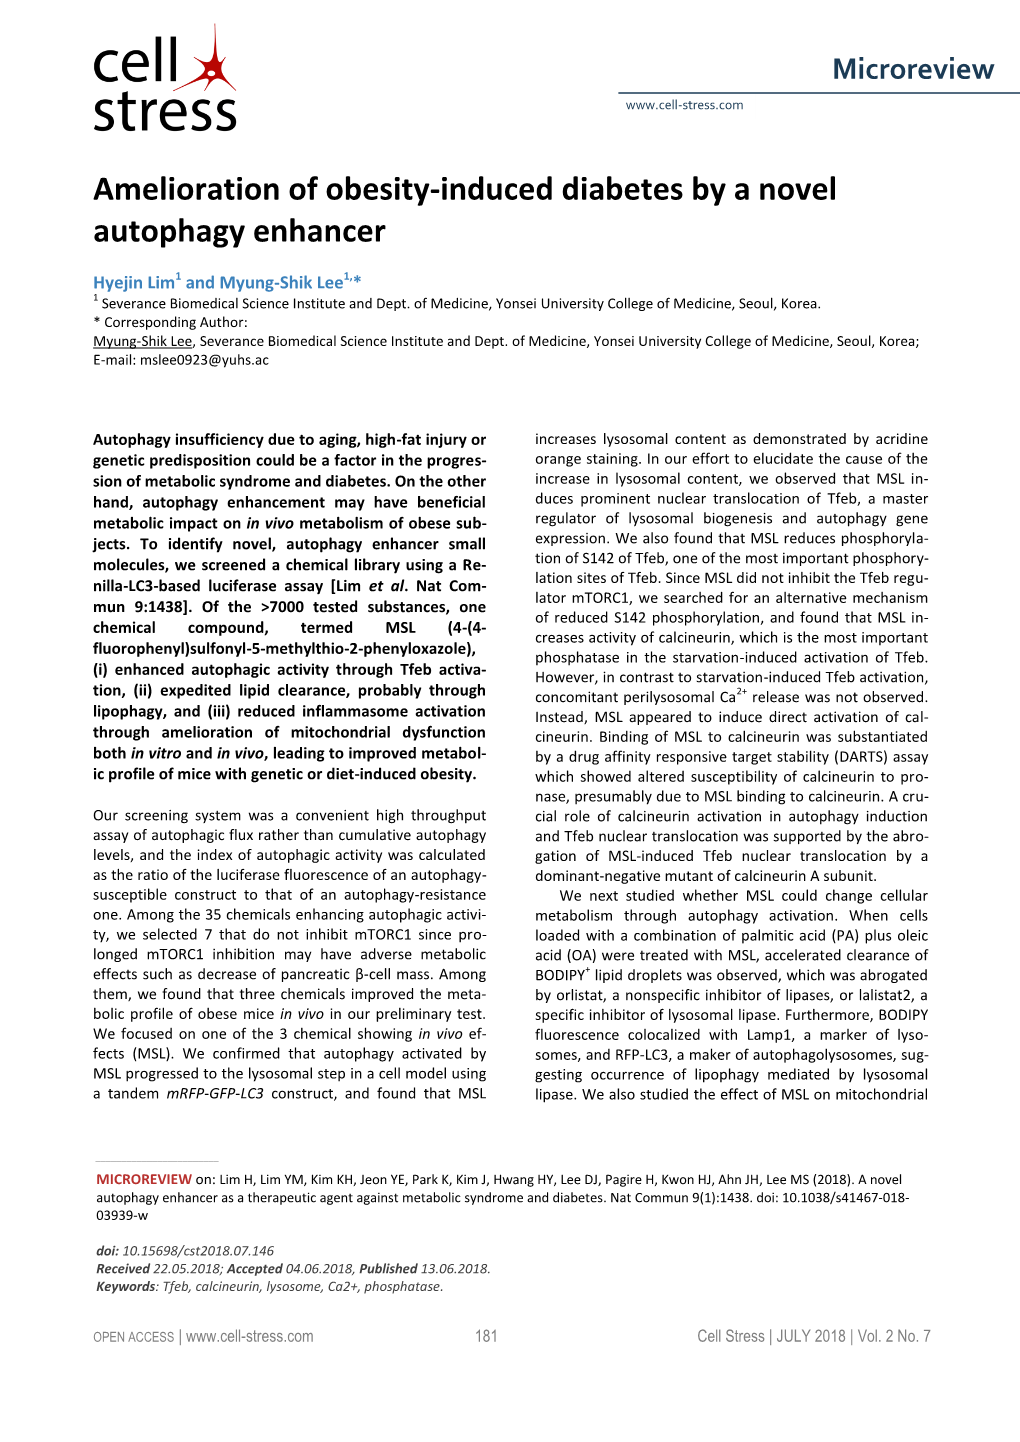 Amelioration of Obesity-Induced Diabetes by a Novel Autophagy Enhancer